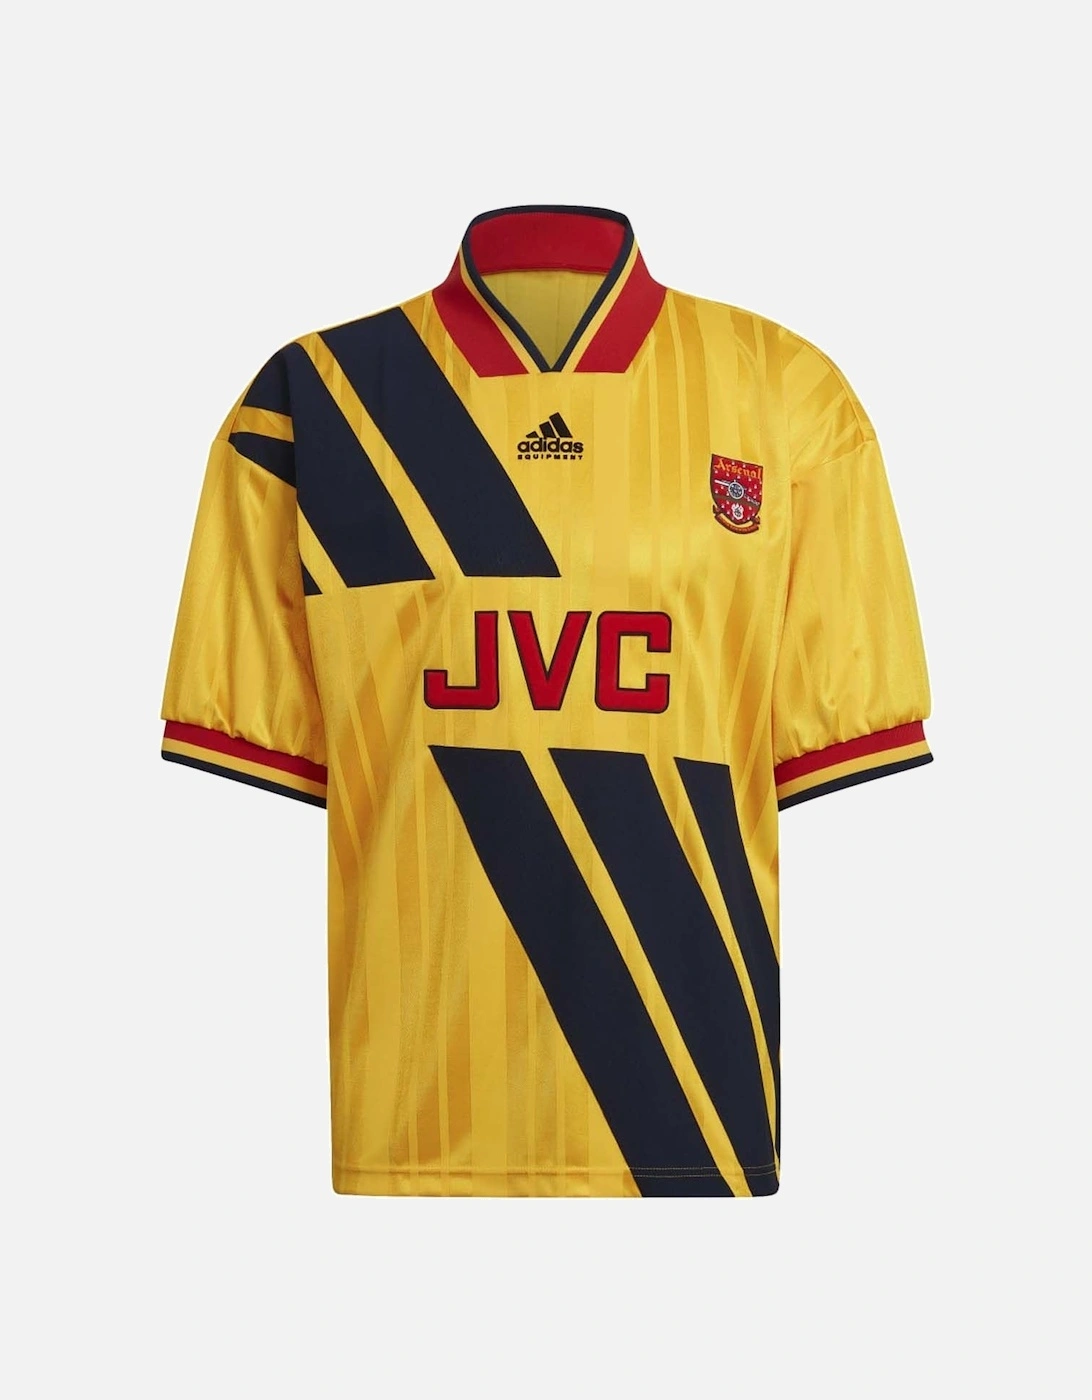 Arsenal FC 93-94 Jersey, 2 of 1